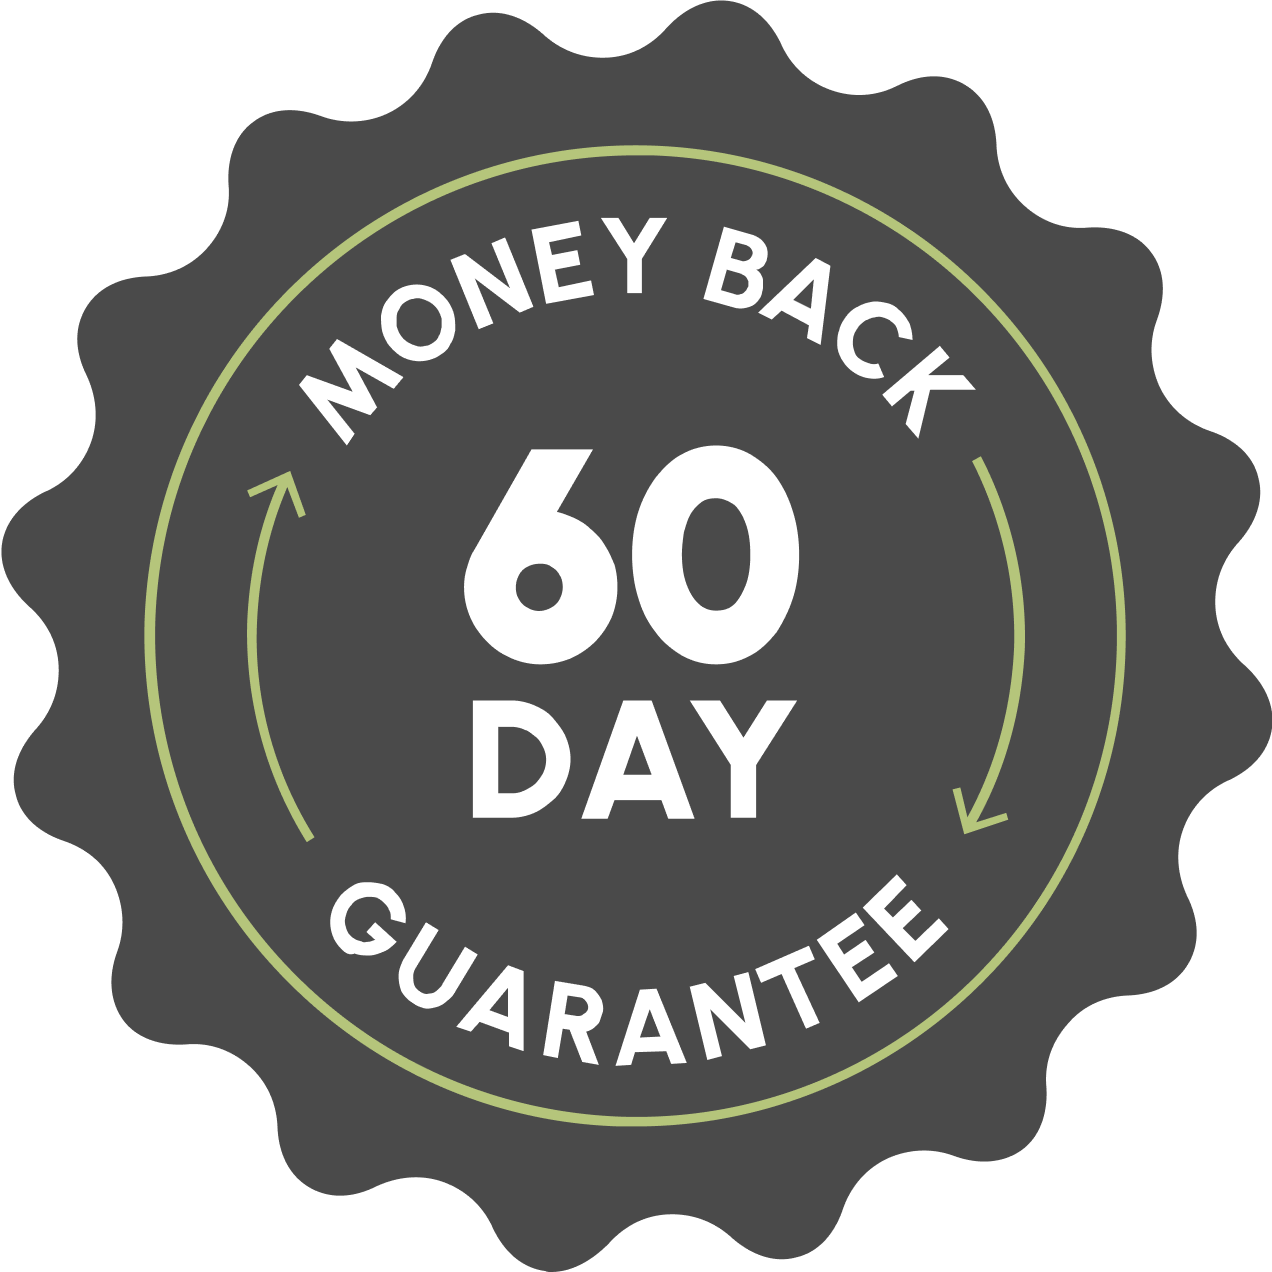 60 days money back guarantee logo of partiQlar brand